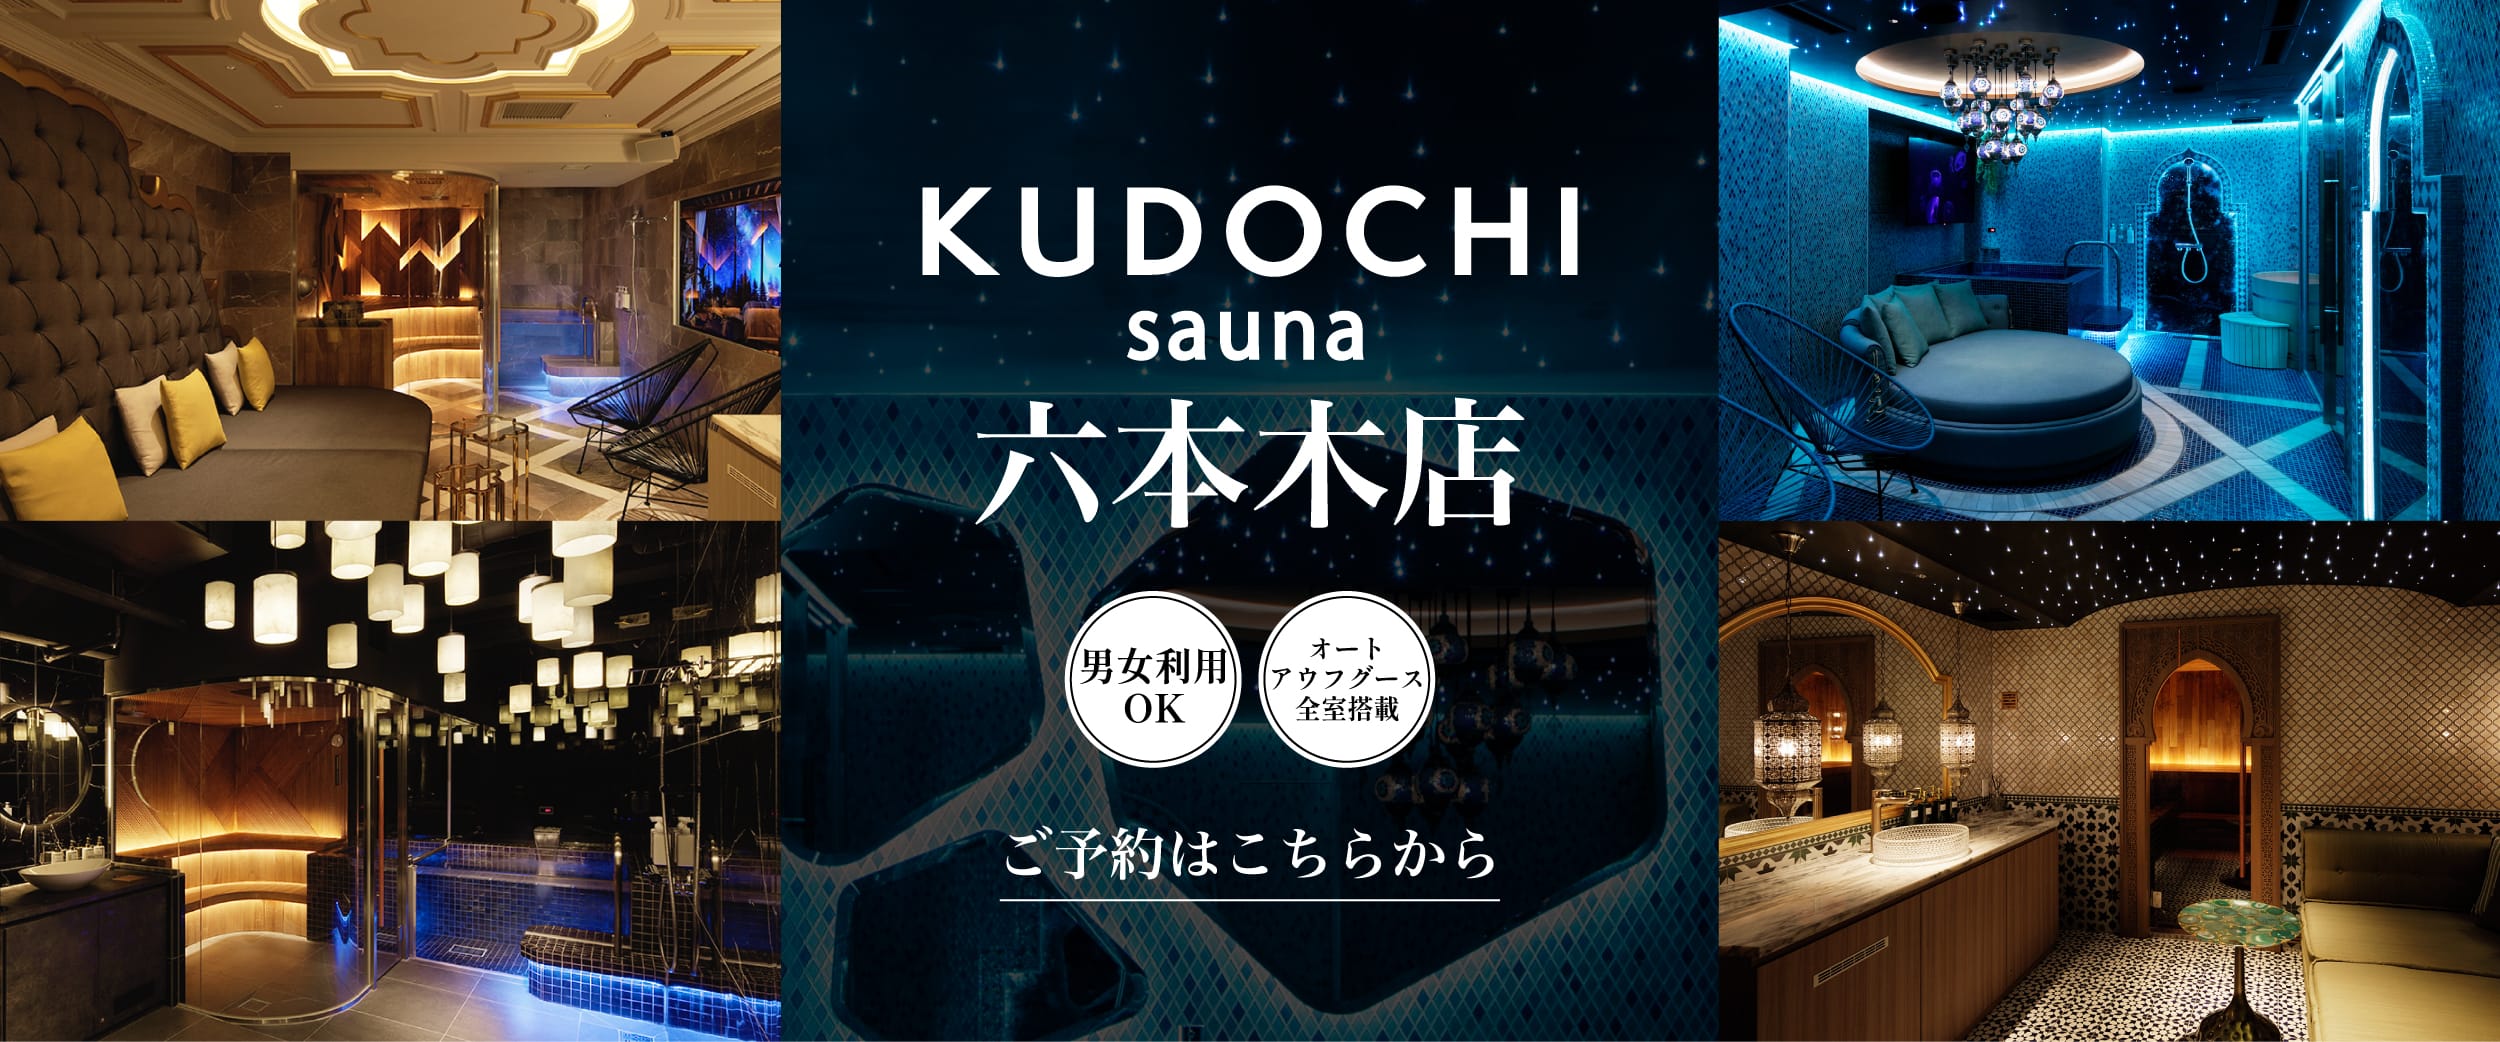 KUDOCHI sauna 六本木店 男女利用OK オートアウフグース全室搭載 ご予約はこちらから